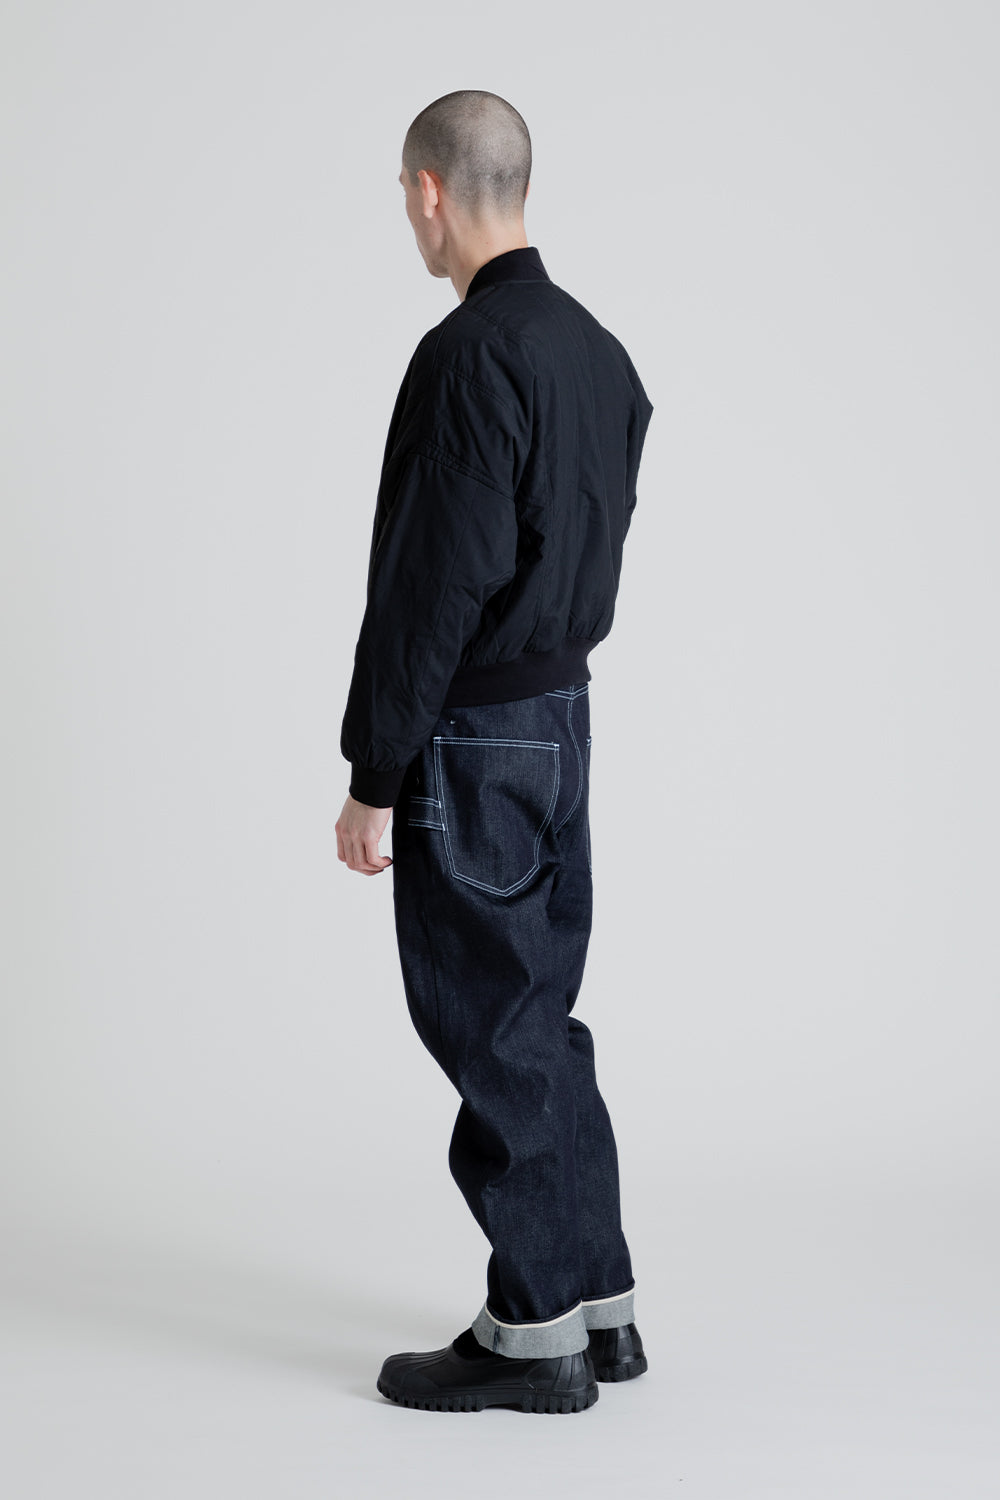 Spring Style – Clothes for Short Men | Men's Fashion, Street Style & Hair |  Jason LoPresti